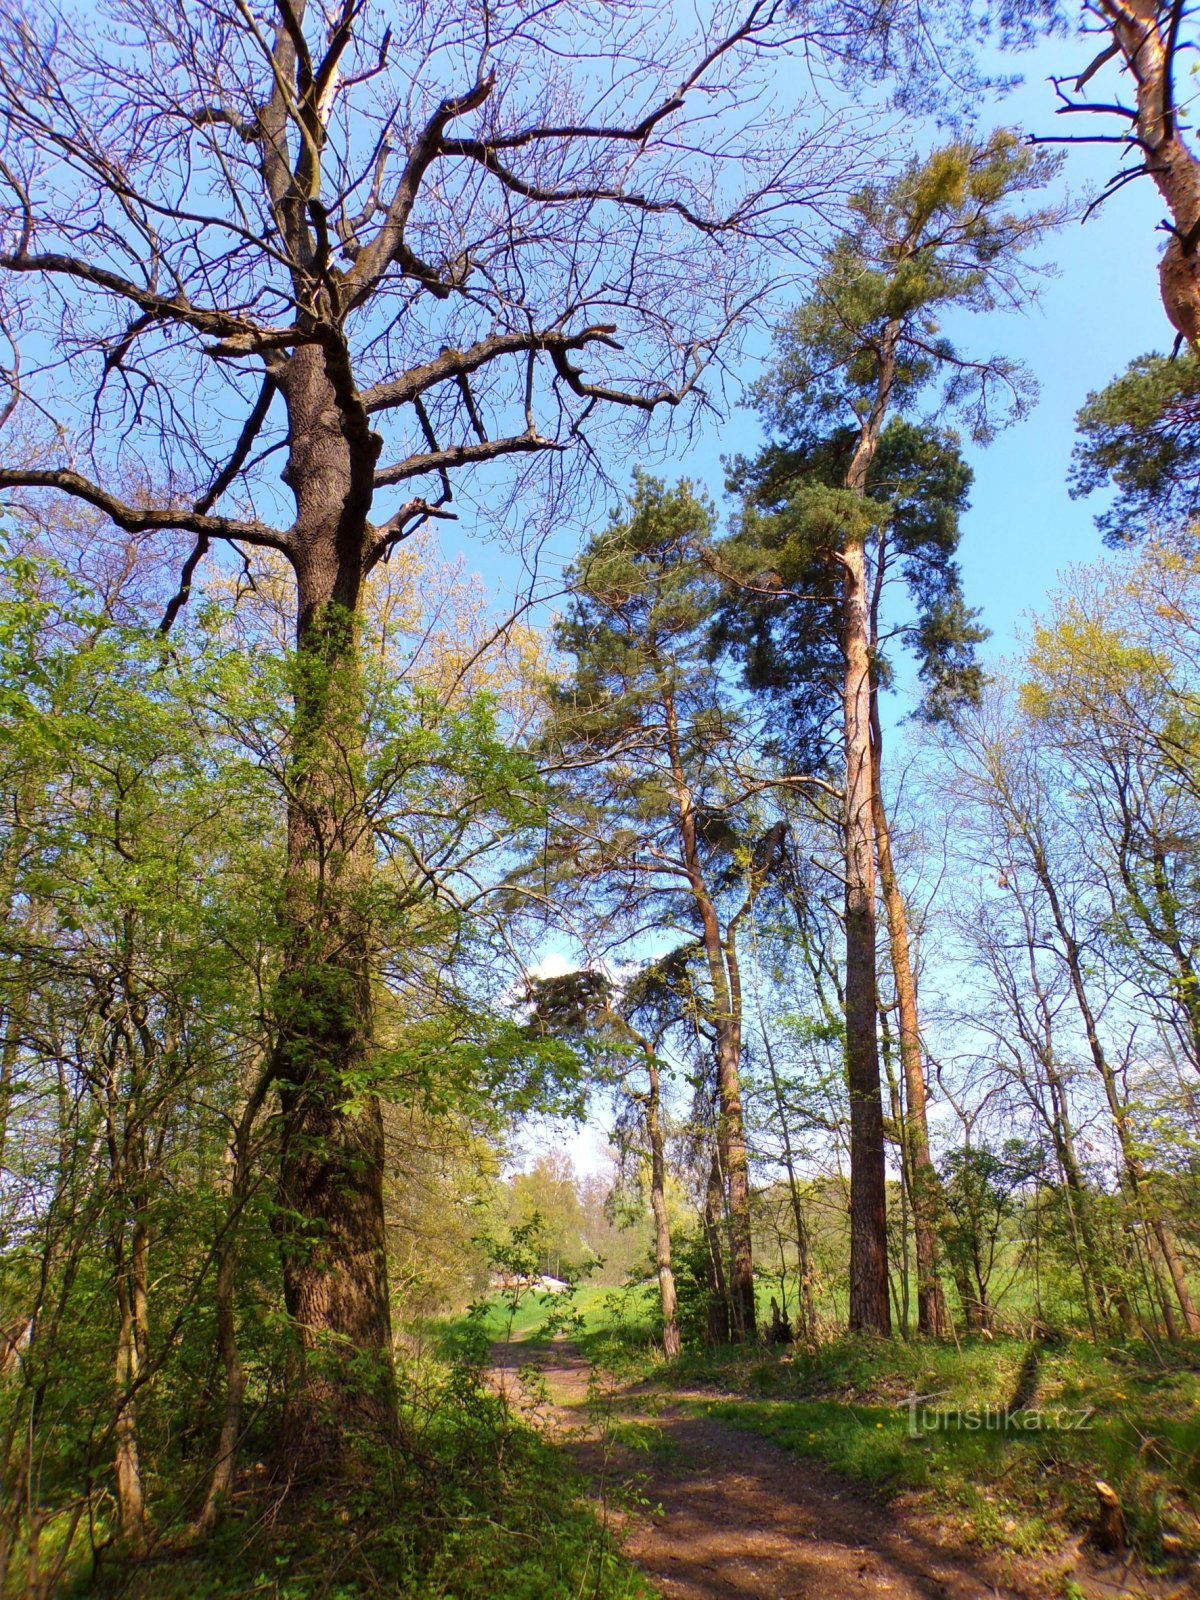 Naravni spomenik U Pohránovského rybníka (Pohránov, 4.5.2022. XNUMX. XNUMX)